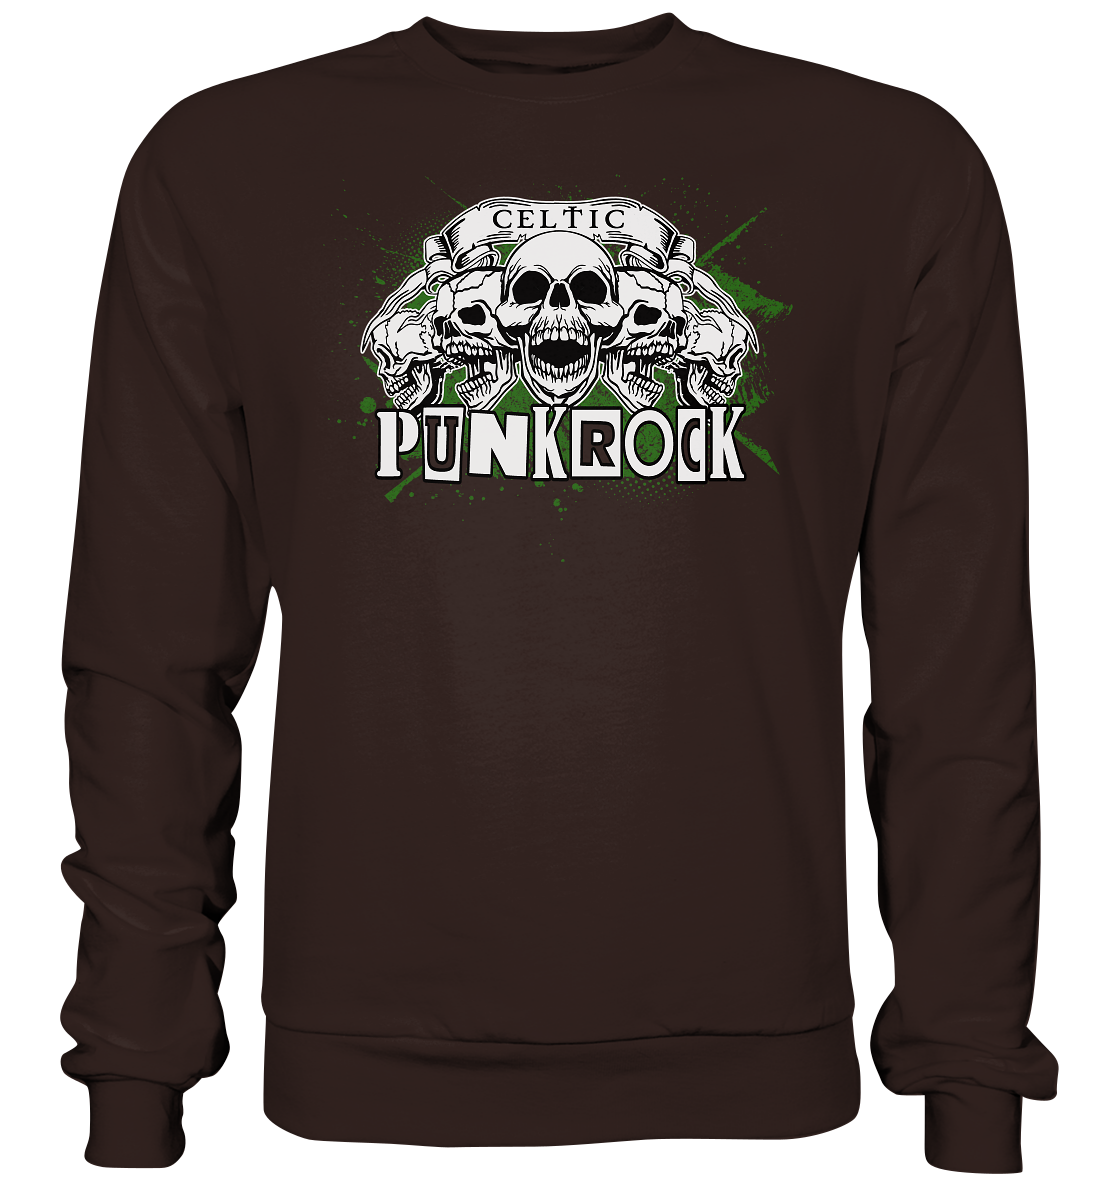 Celtic "Punkrock" - Basic Sweatshirt